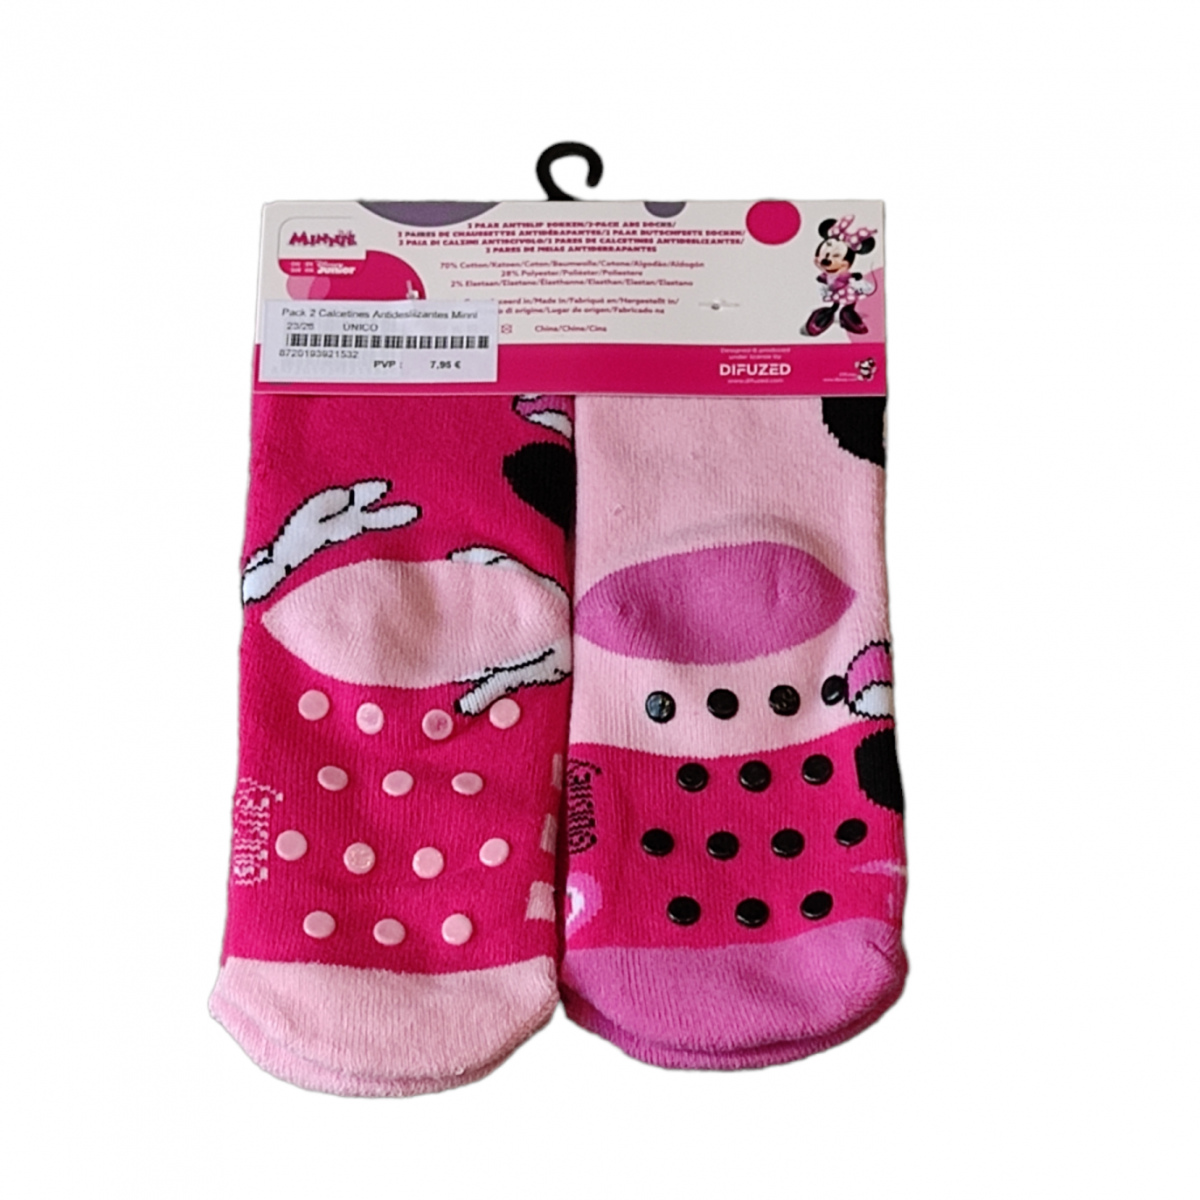 Pack de 2 calcetines antideslizantes de Minnie Mouse para niña.